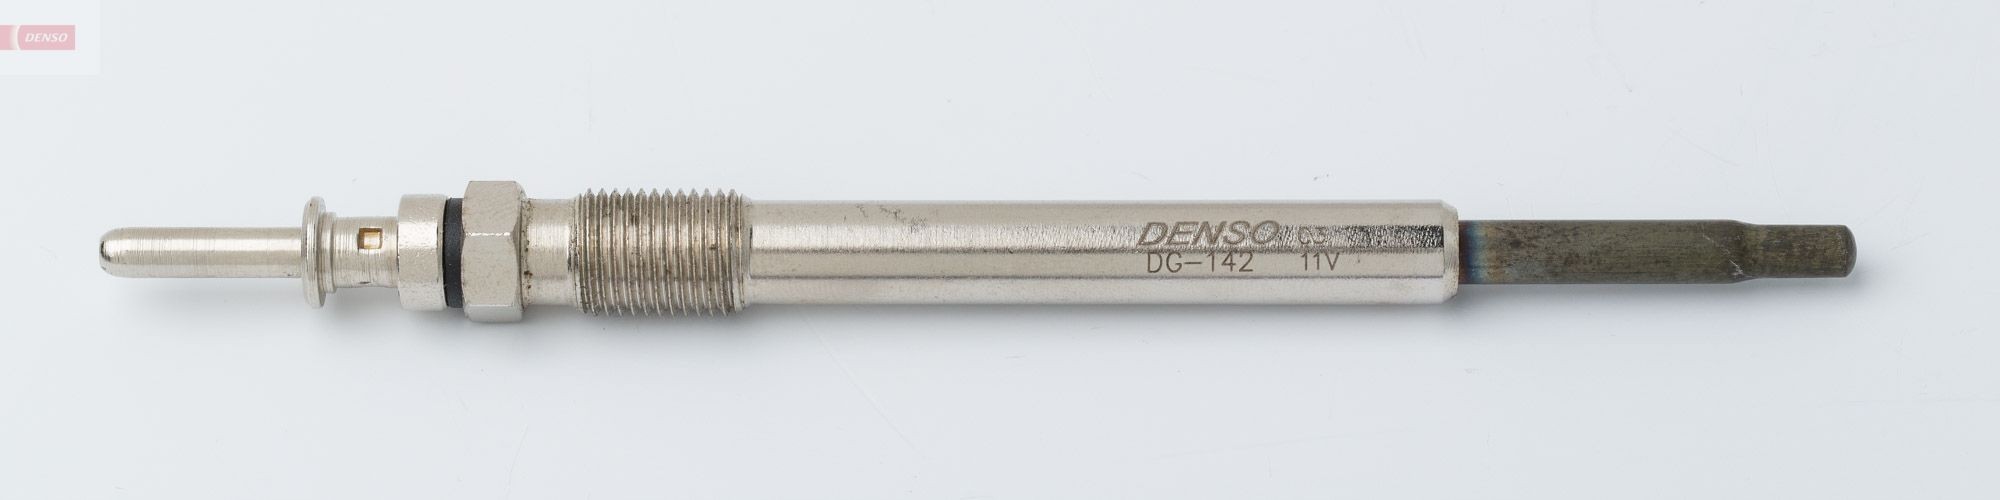 DENSO DG-142 Glow plug 5 344 502